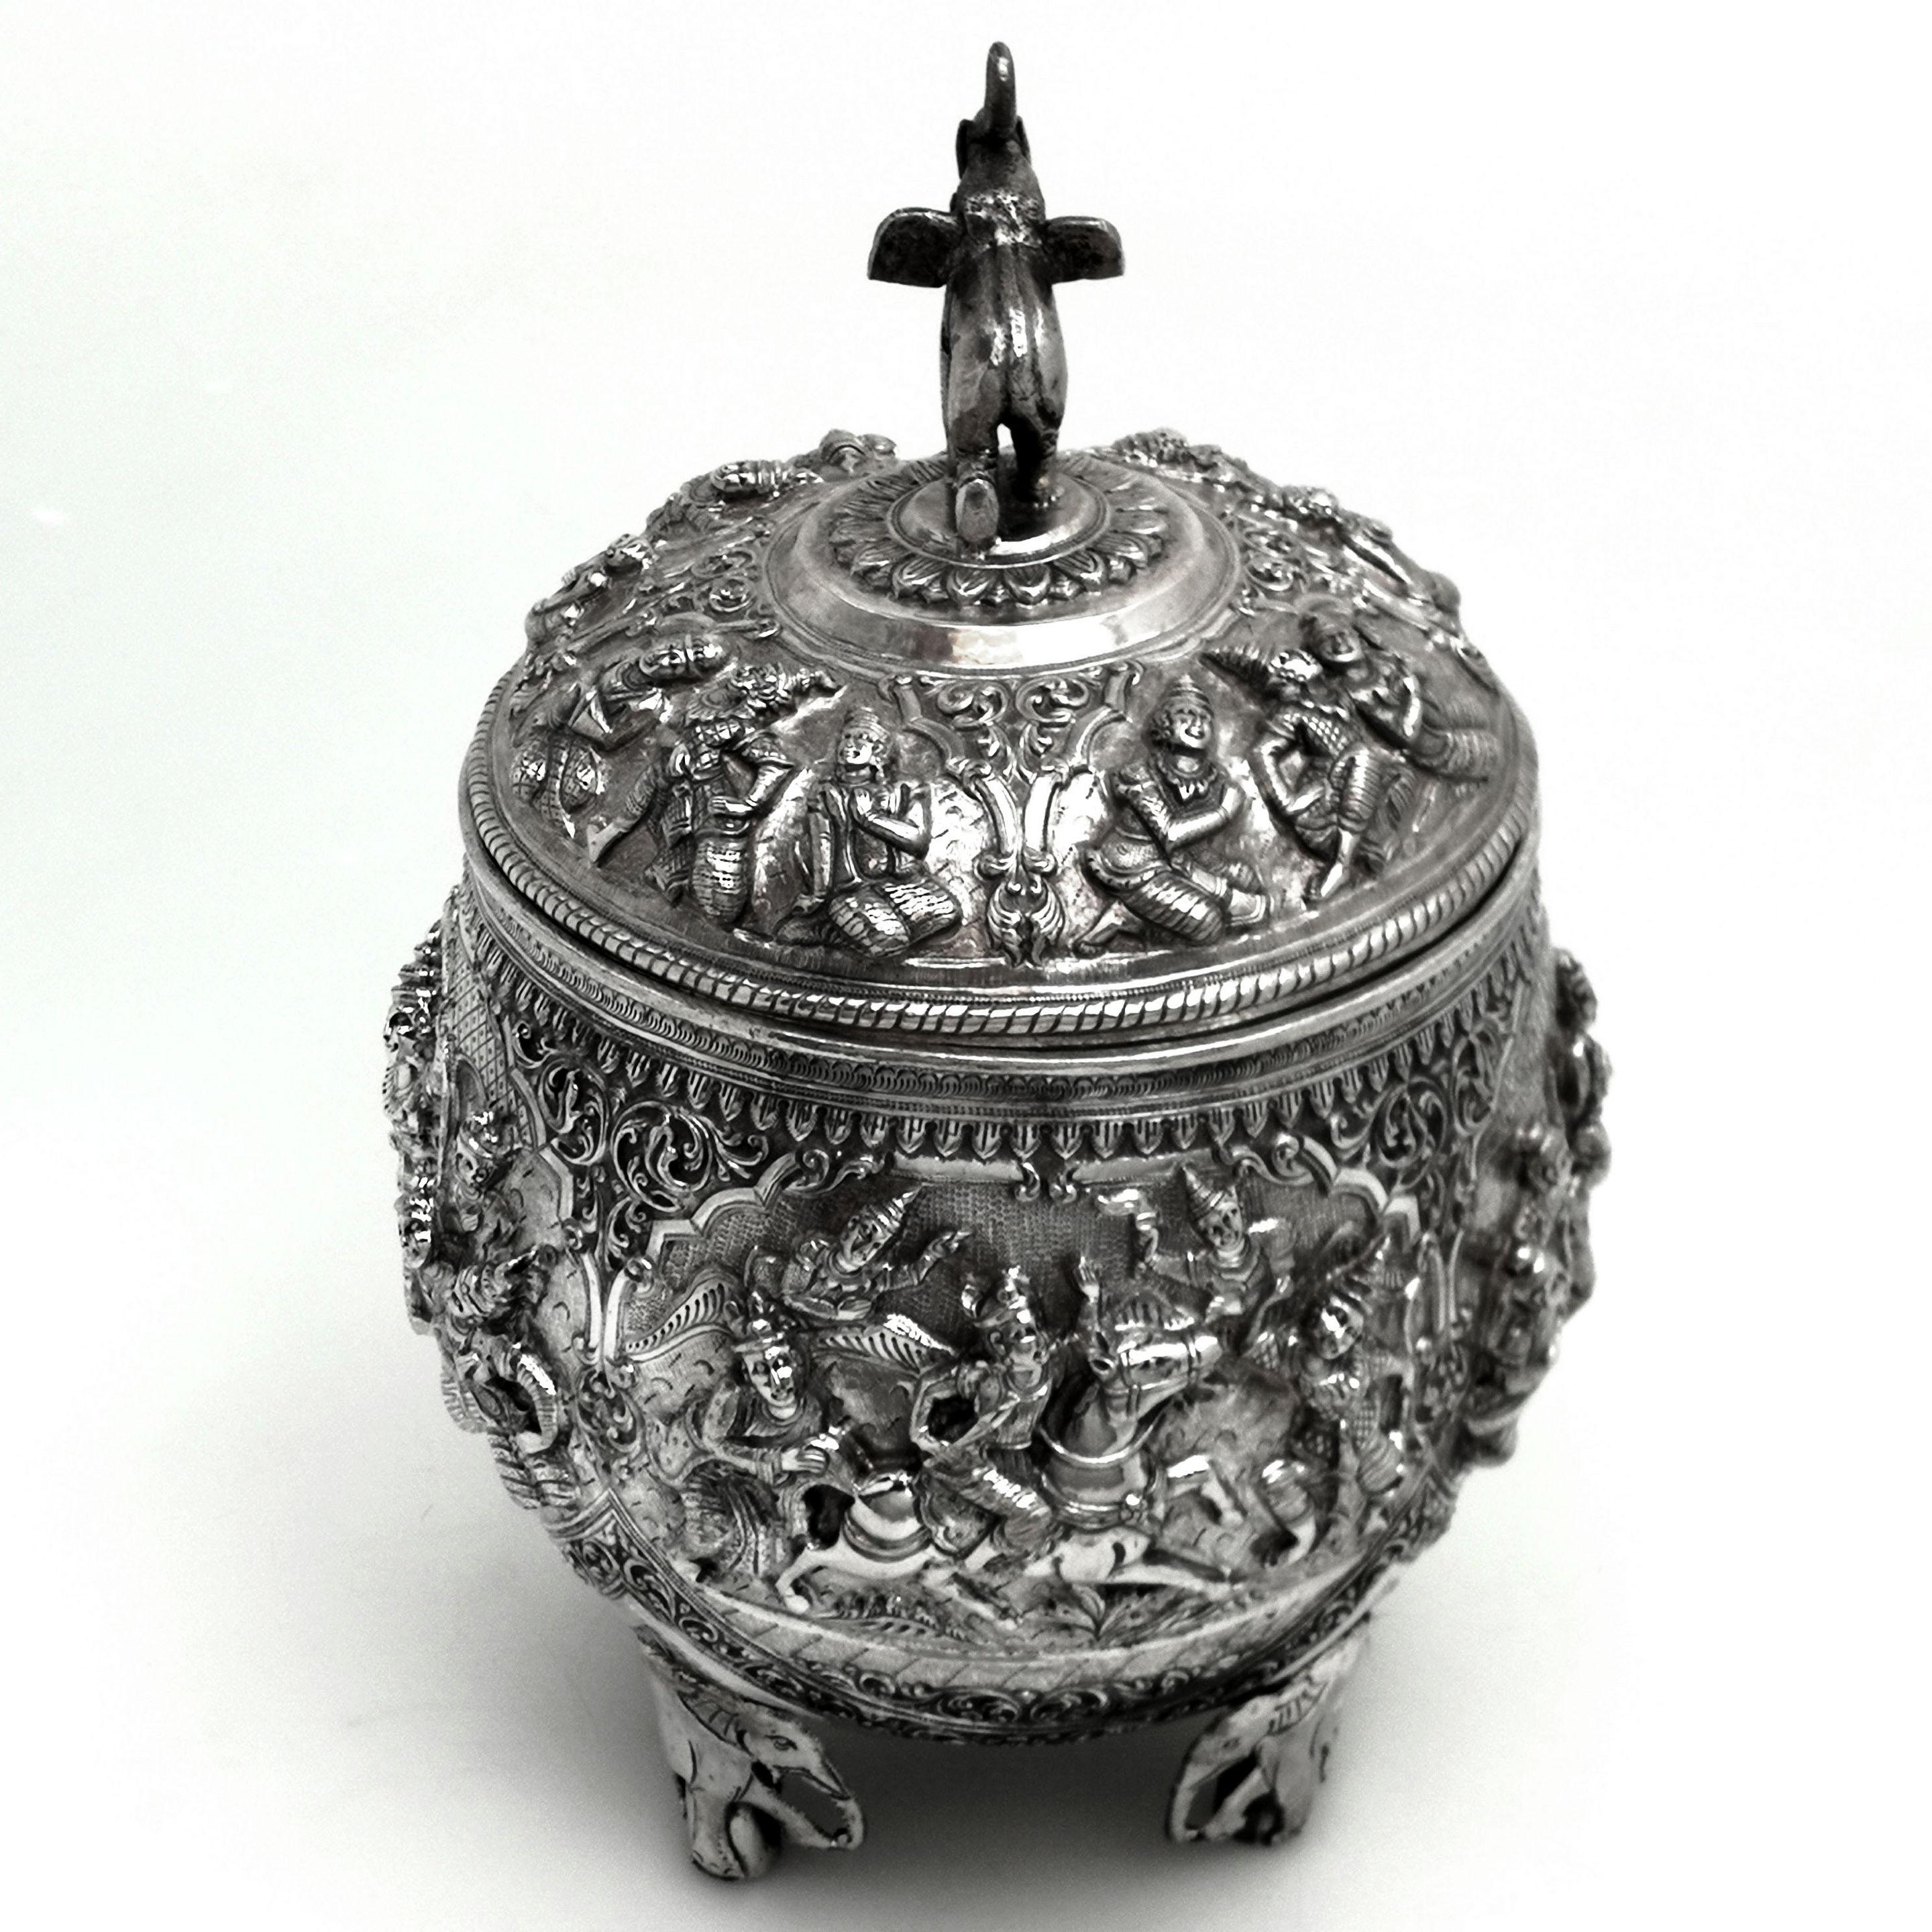 19th Century Antique Burmese Solid Silver Box / Covered Bowl & Lid circa 1890 Burma / Myanmar